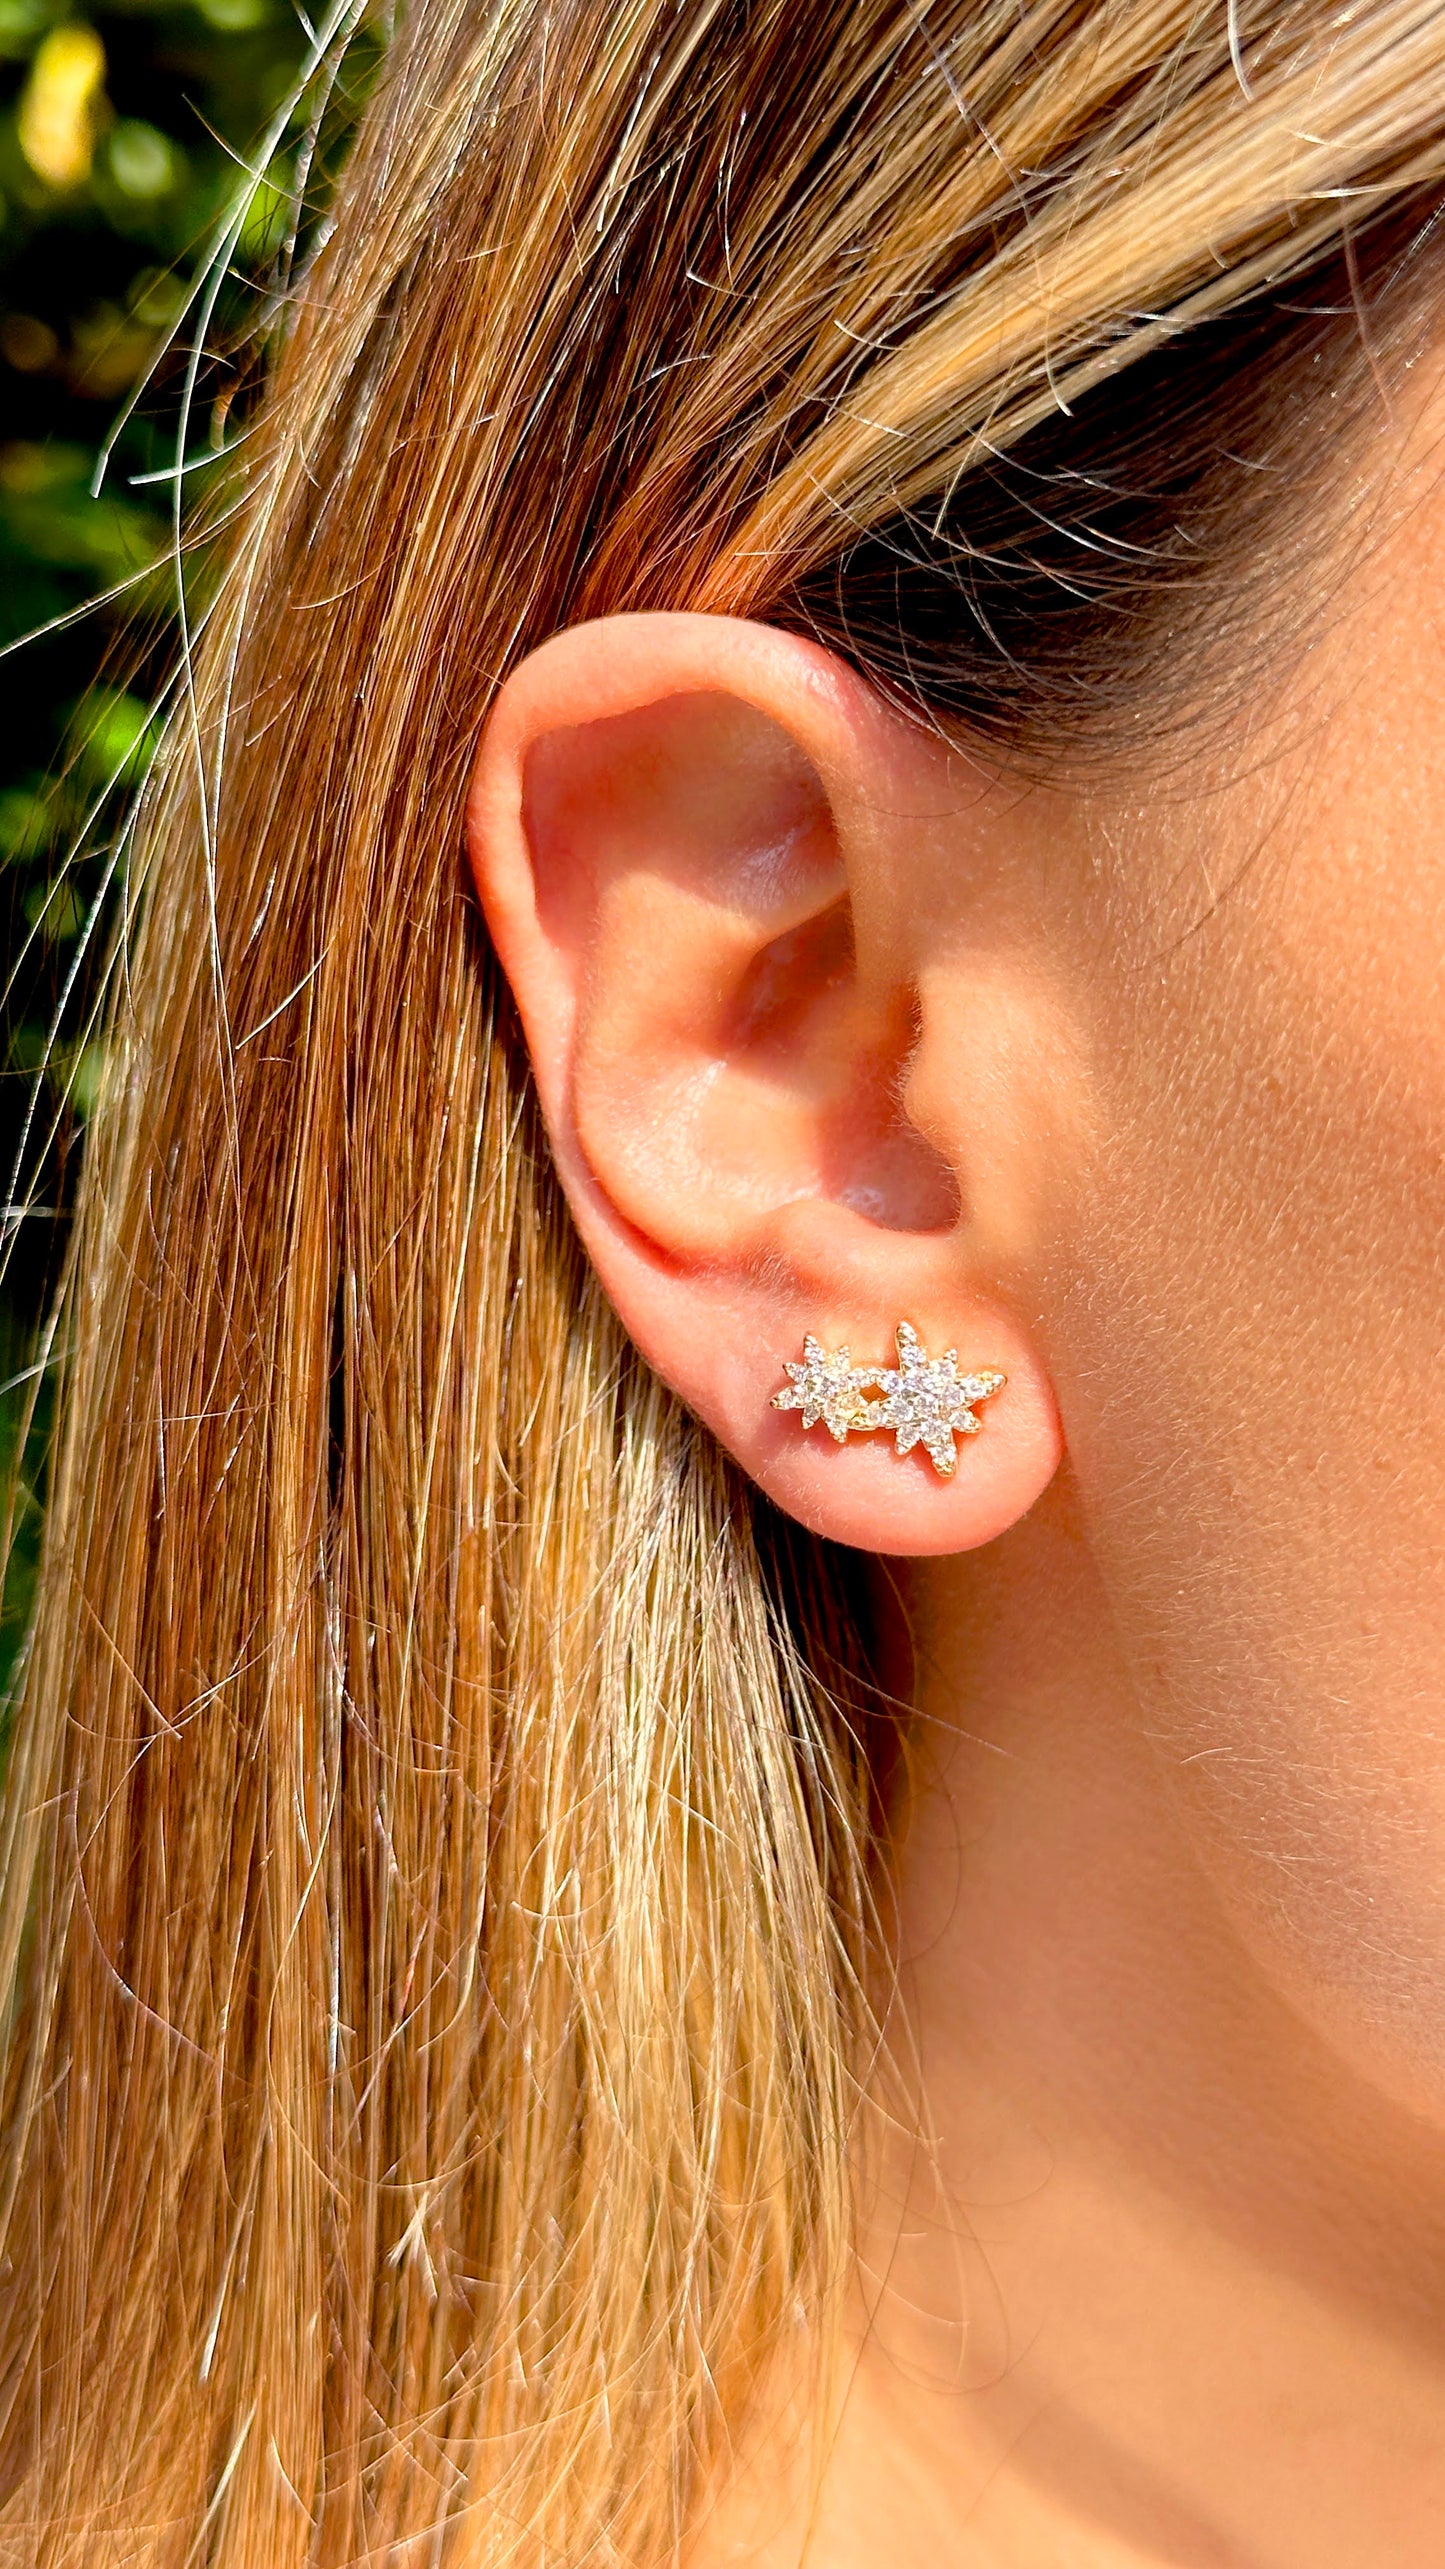 Double Ear Chain with Stars Earrings